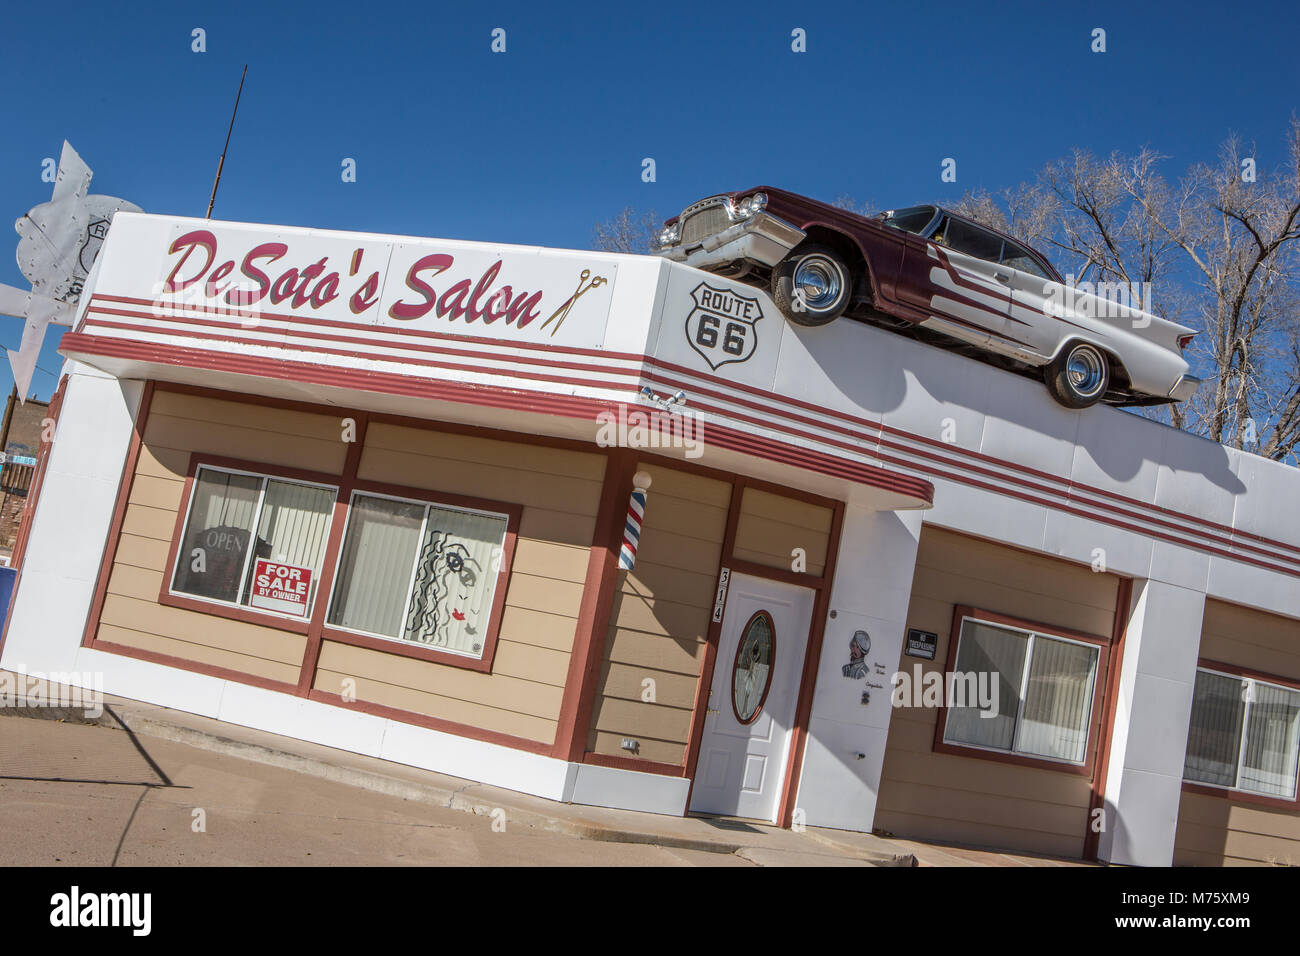 DeSoto's Salon, Desoto's Barber ShopAsh Fork, Arizona, USA. Stock Photo